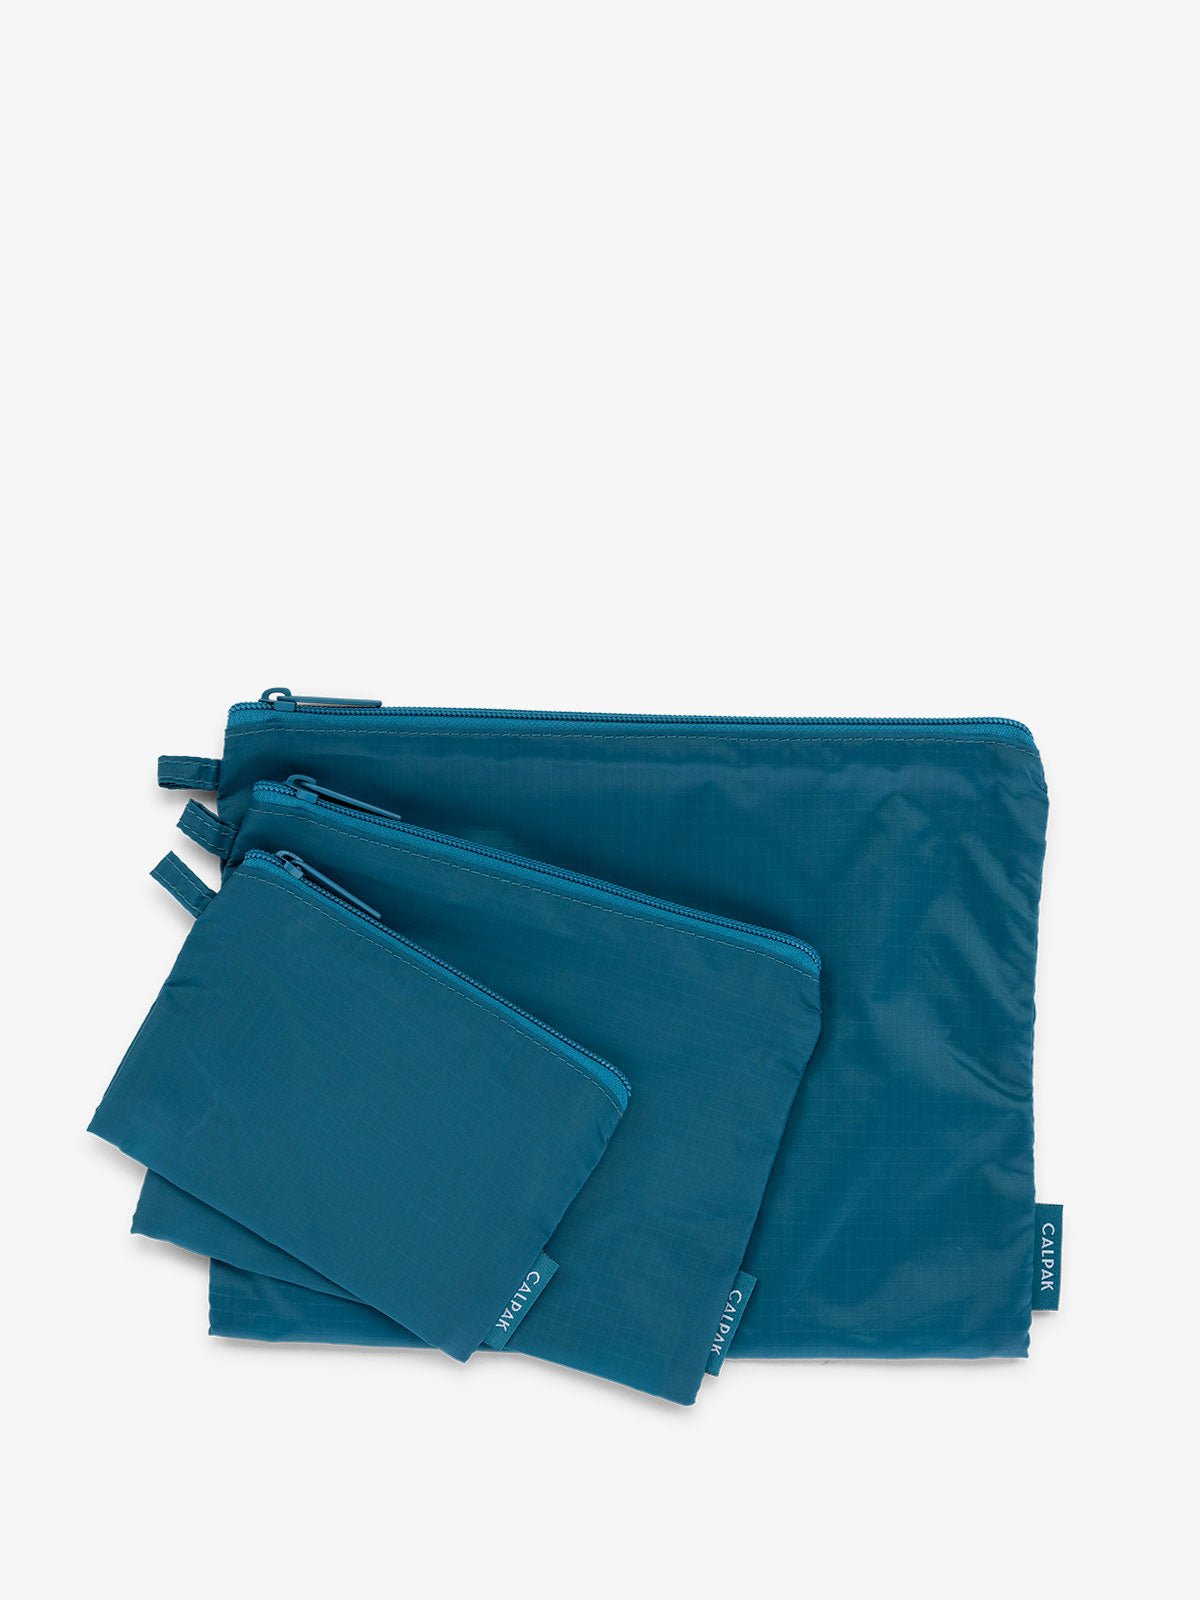 CALPAK Compakt zippered pouches in lagoon